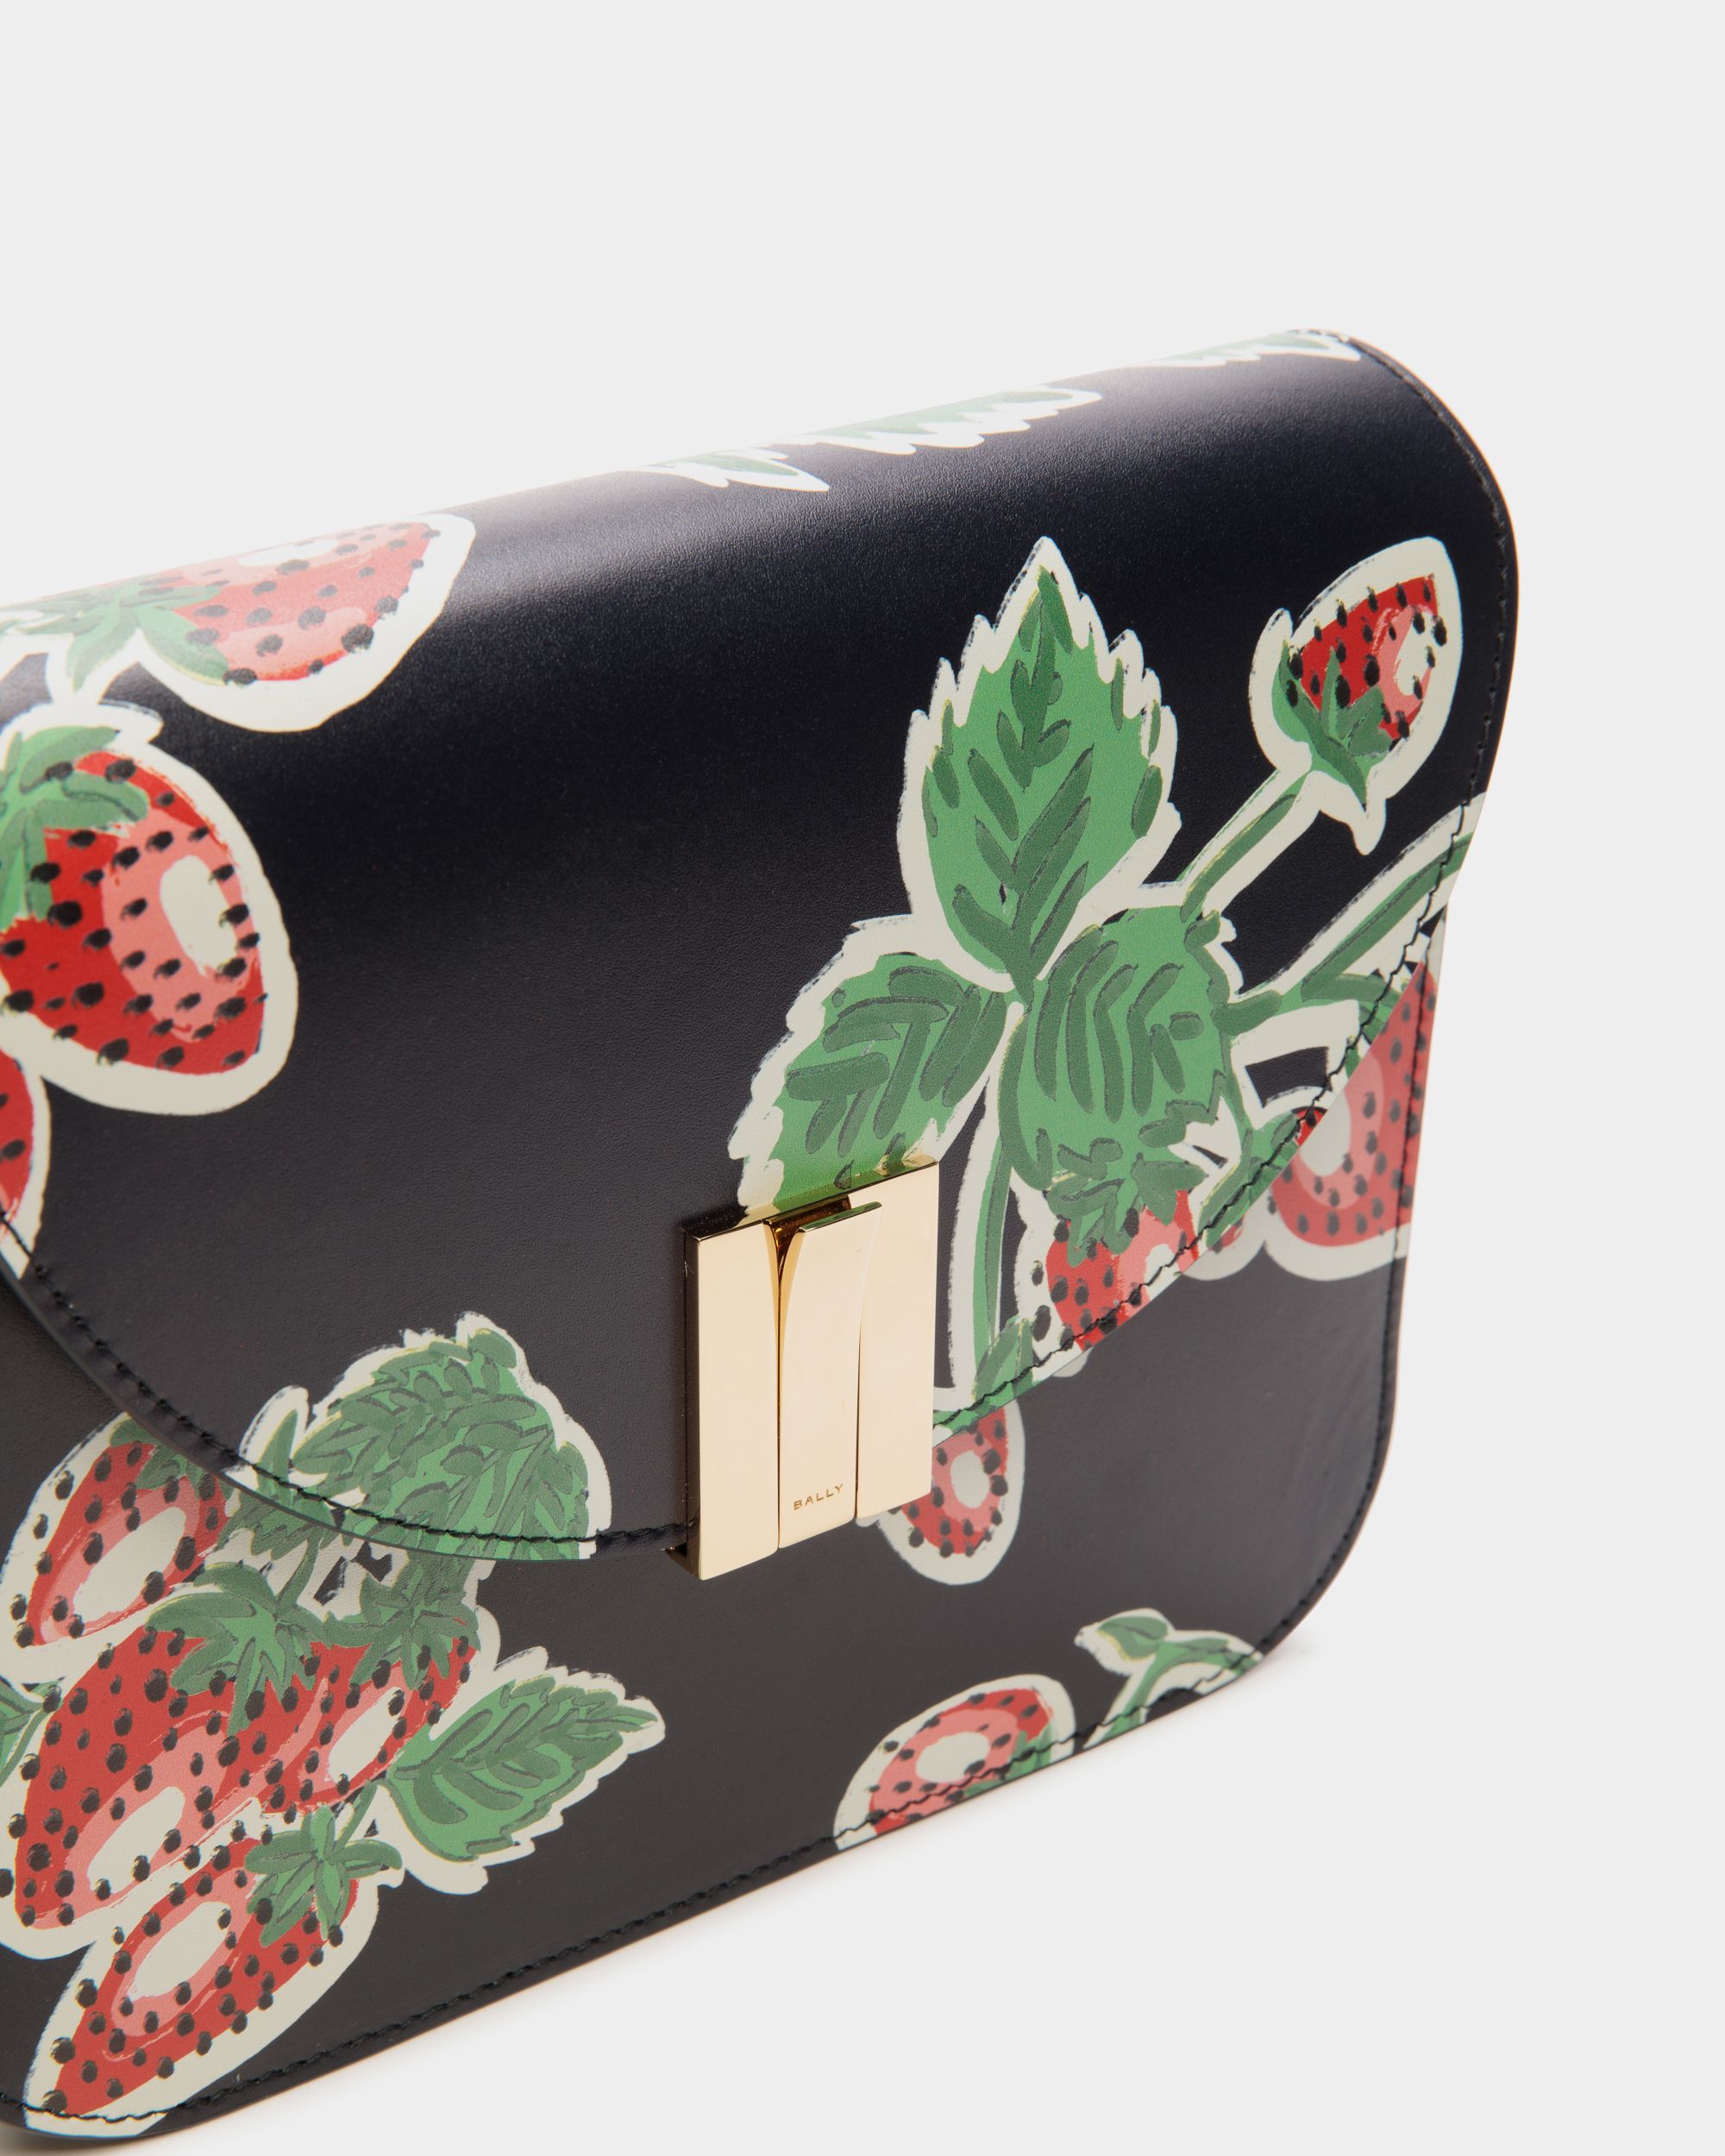 Ollam | Women's Crossbody Bag in Strawberry Print Leather | Bally | Still Life Detail